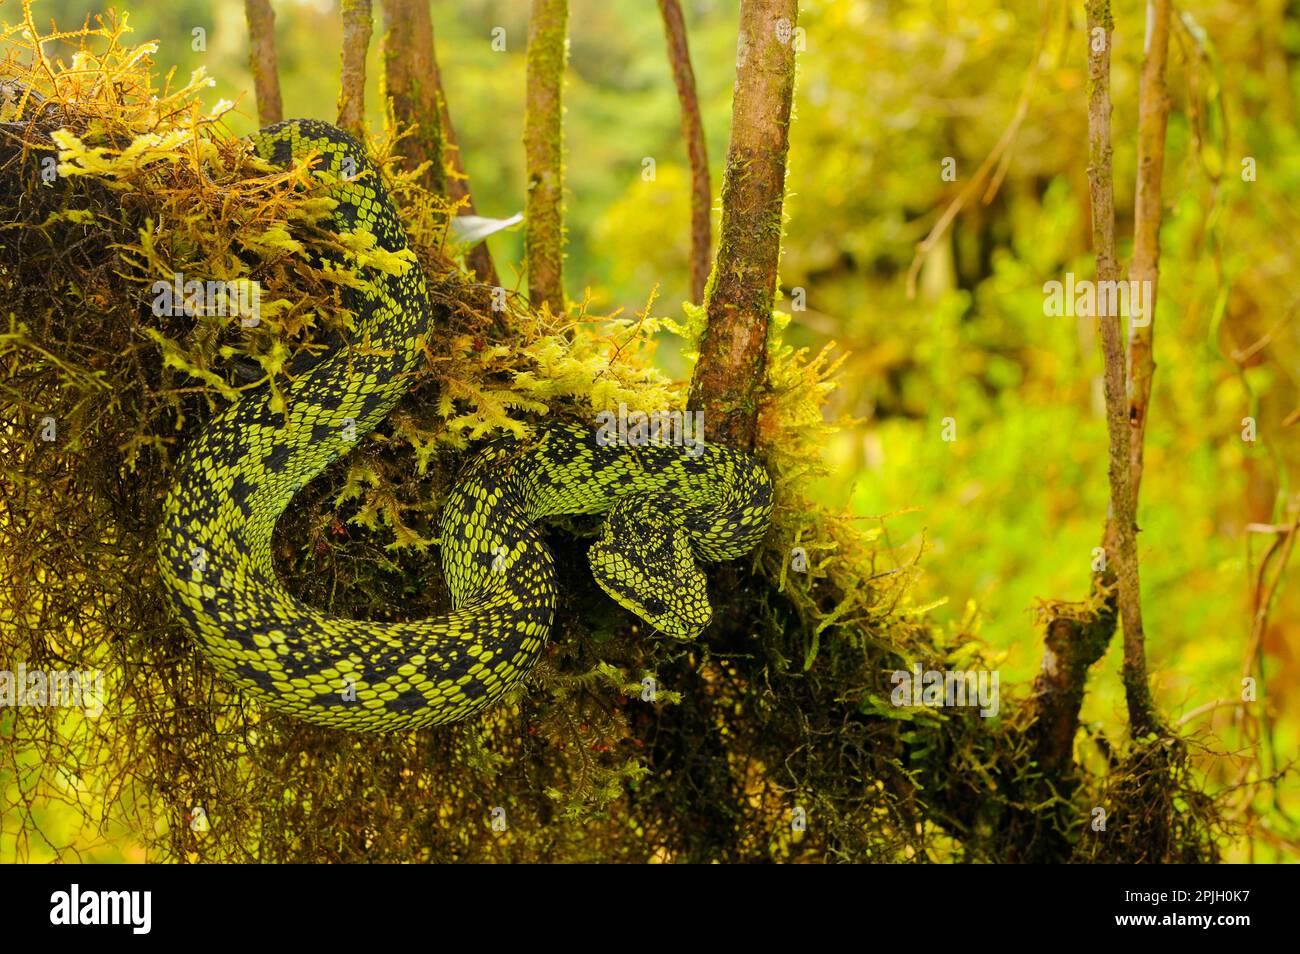 Green bush viper Atheris squamigera , on a branch, captive, Congo, Africa  Copyright: imageBROKER